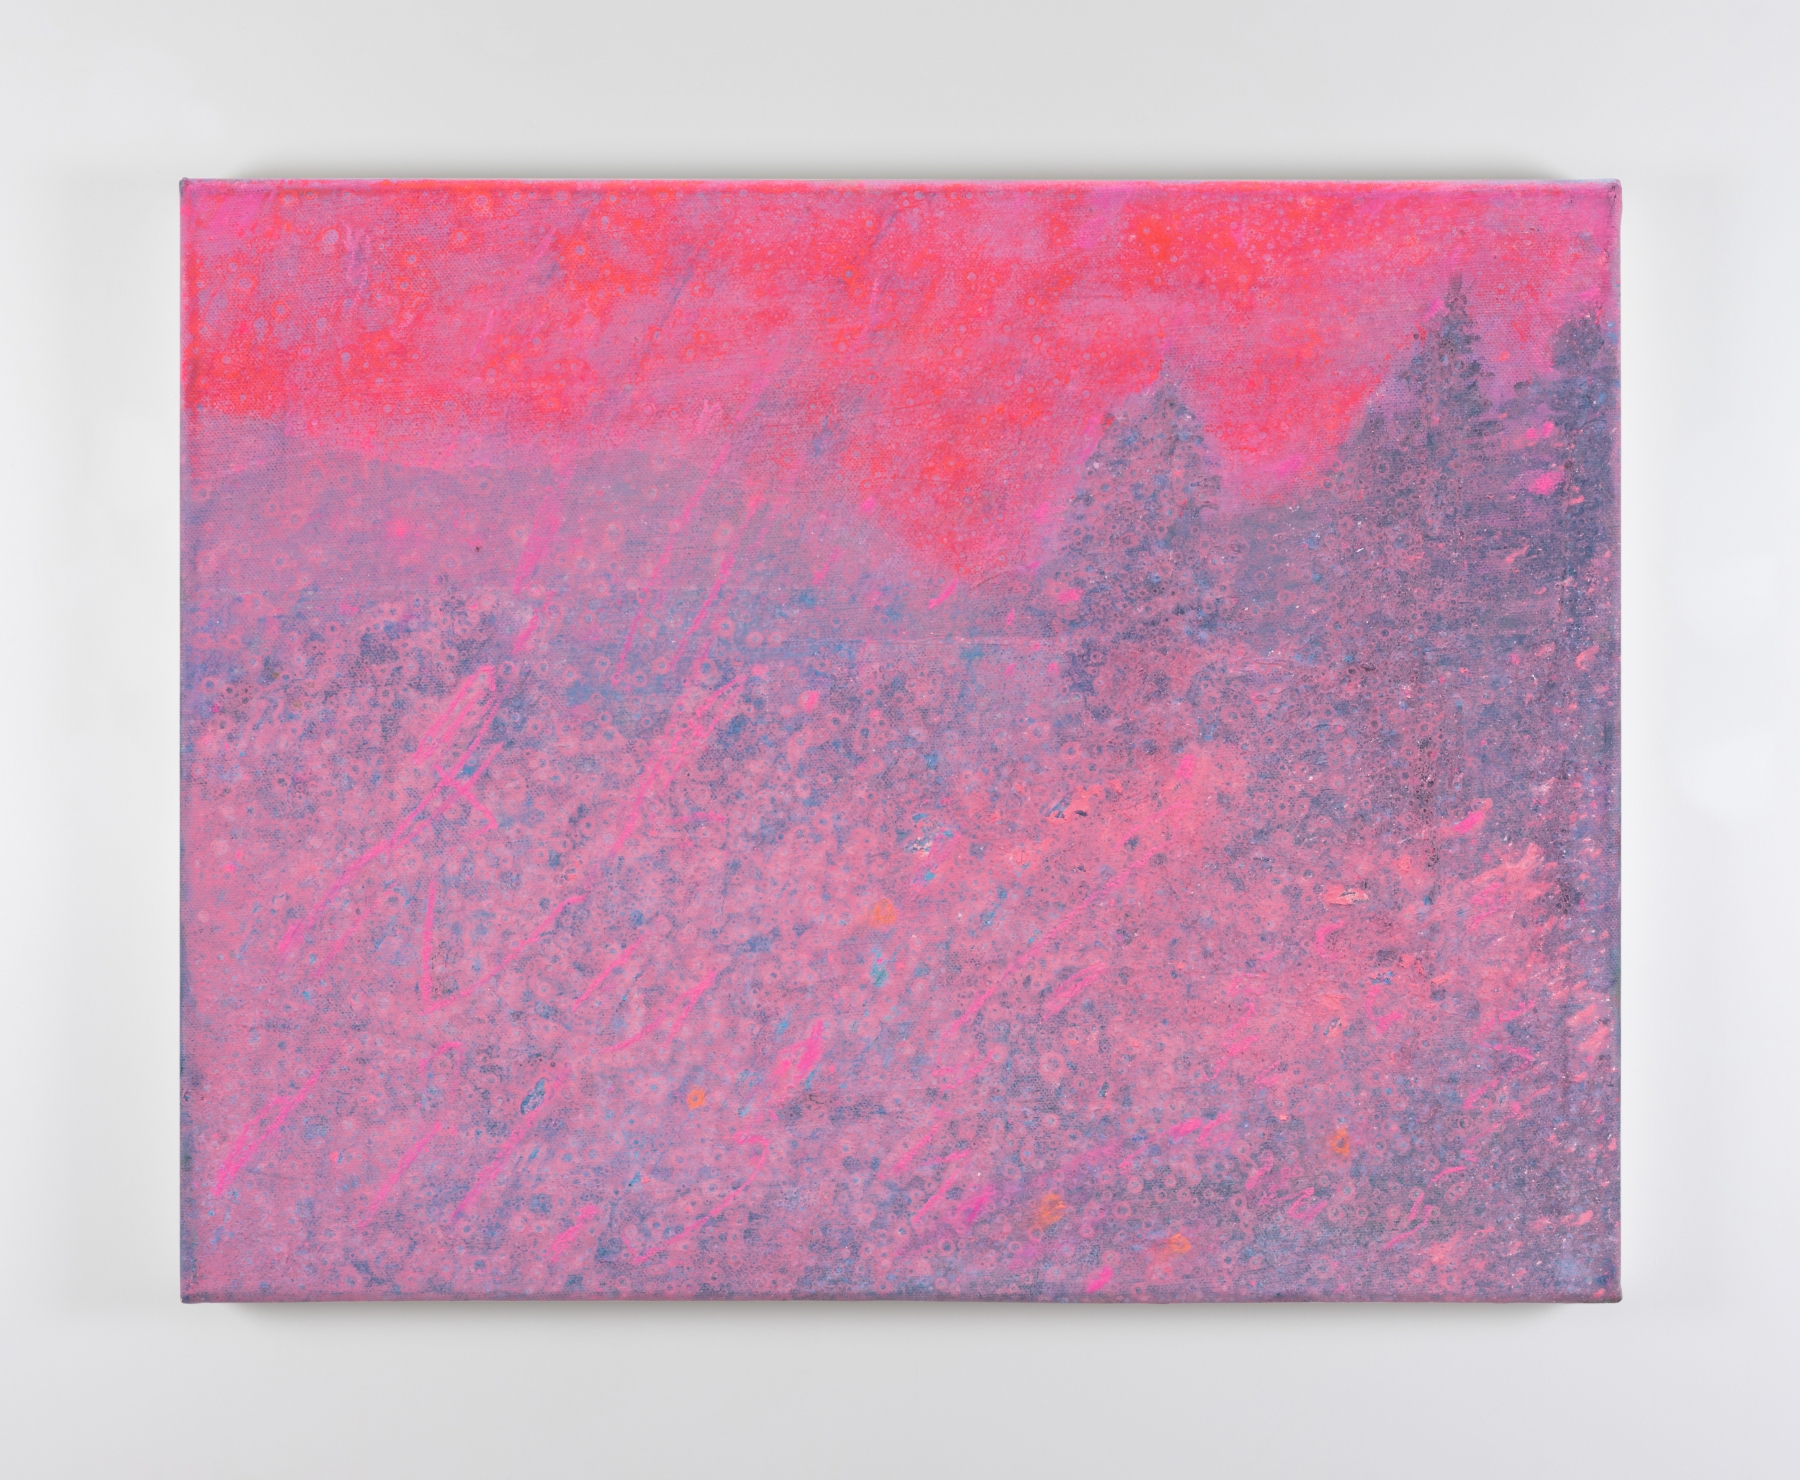 Elizabeth Magill&nbsp;
Flush, 2021
oil on canvas
35.5 x 45.5 cm / 14 x 17.9 in &nbsp;&nbsp;